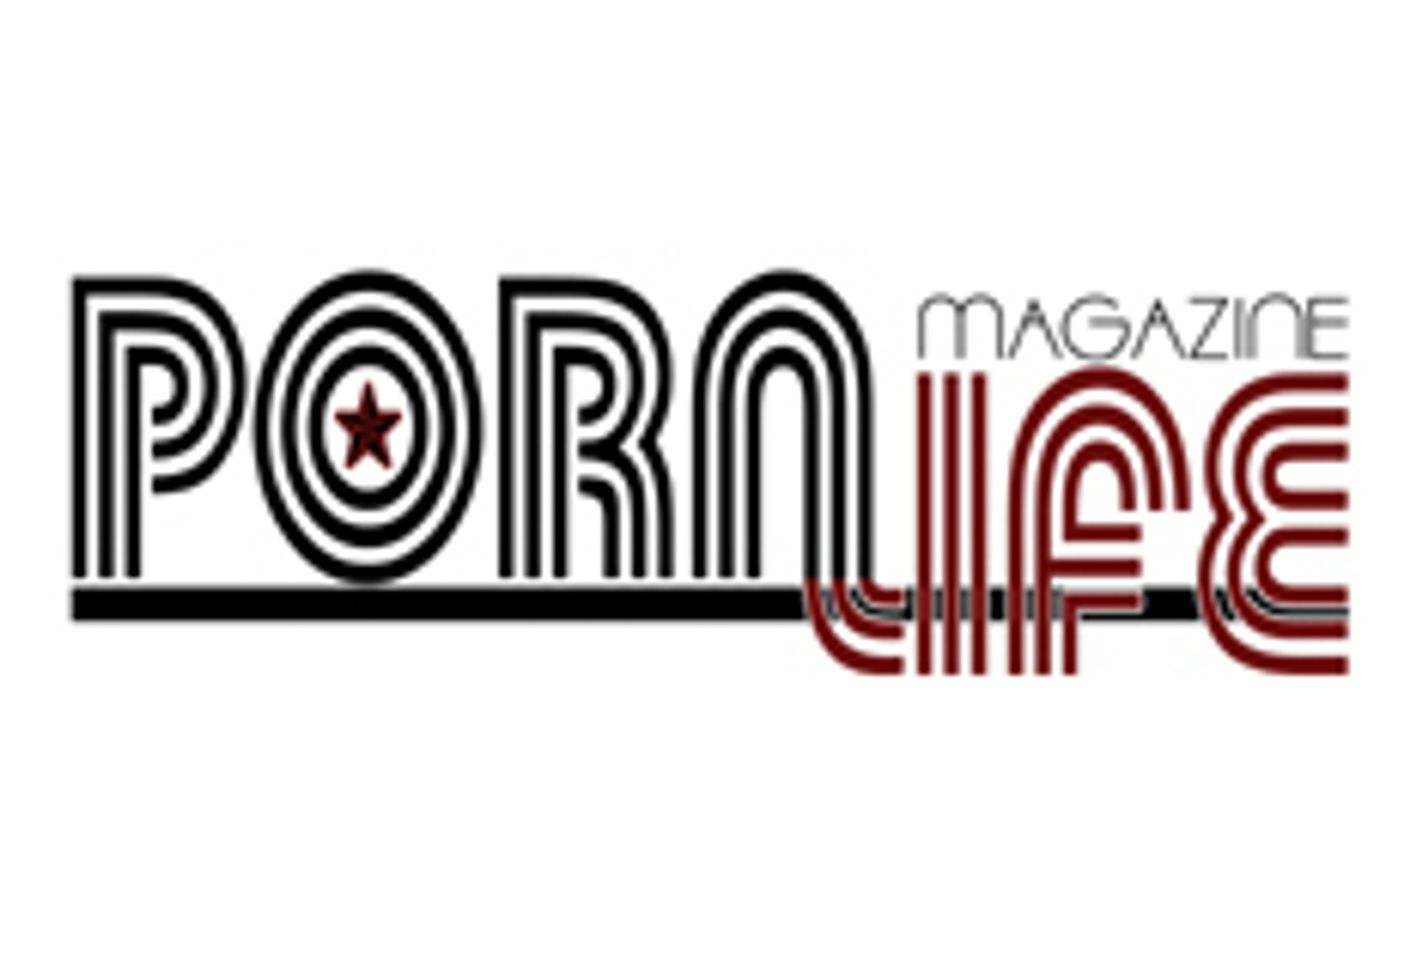 'Porn Life Magazine' Launches